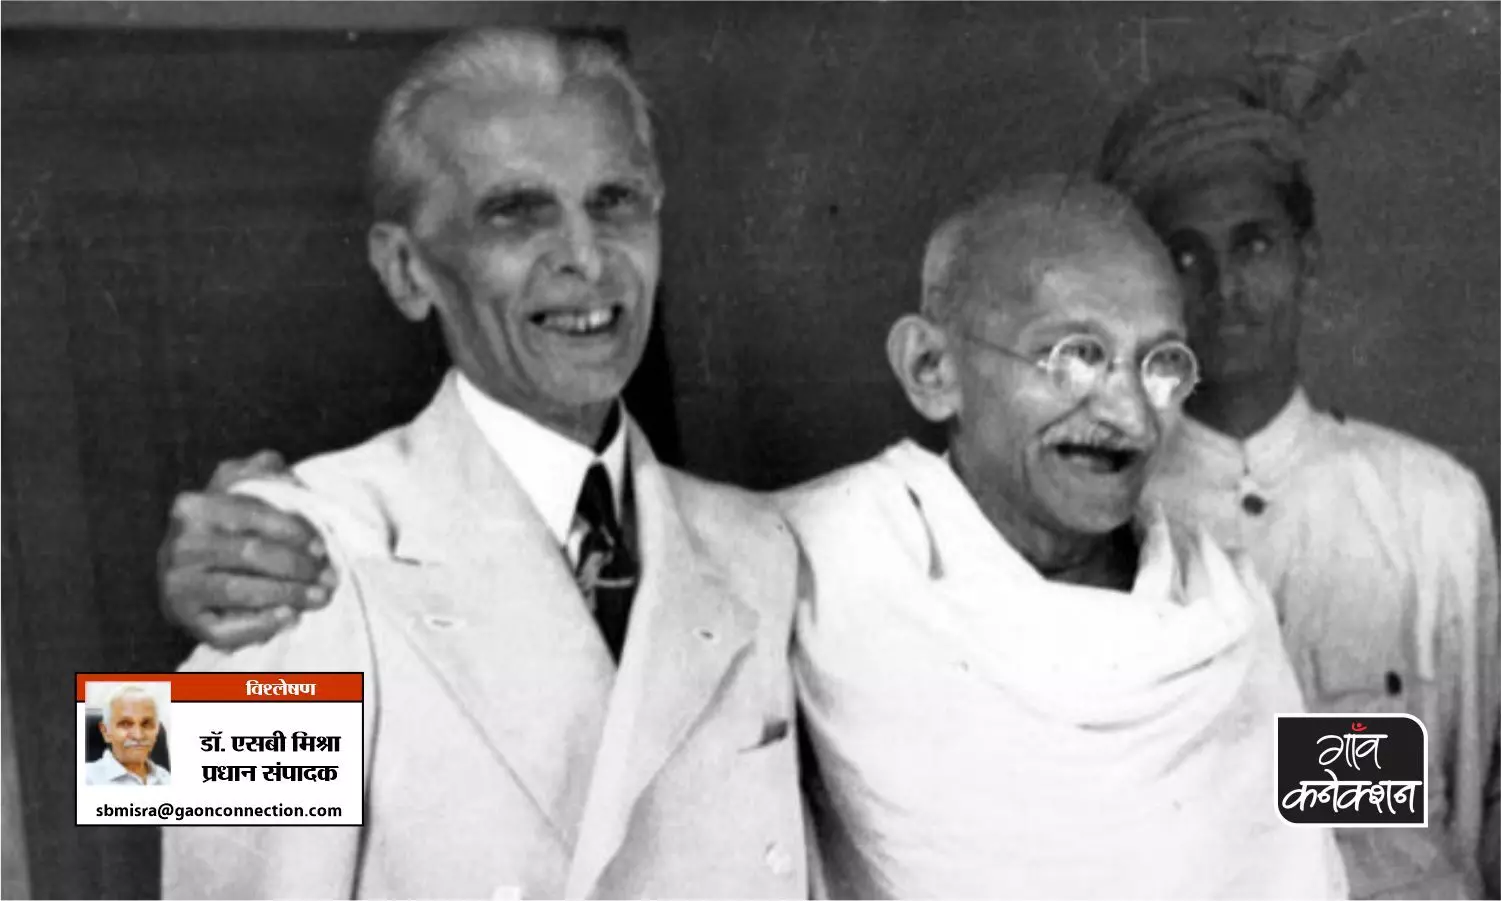 गांधी जी भारत बंटवारे के घोर विरोधी थे